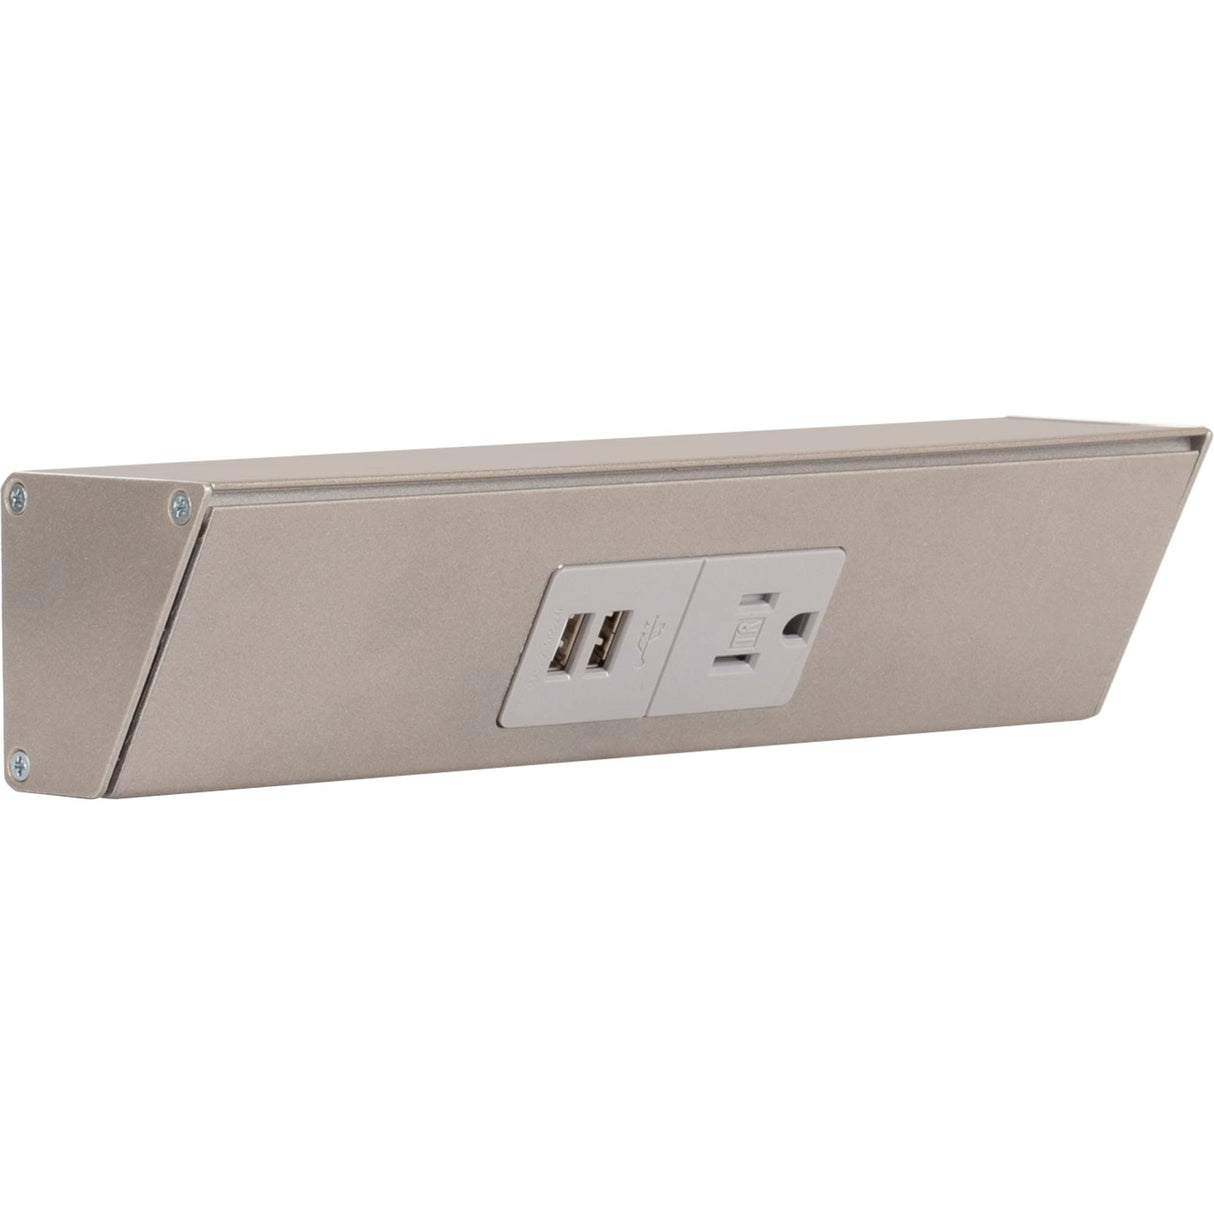 Task Lighting TRU9-1GD-P-SN 9" TR USB Series Angle Power Strip with USB, Satin Nickel Finish, Grey Receptacles